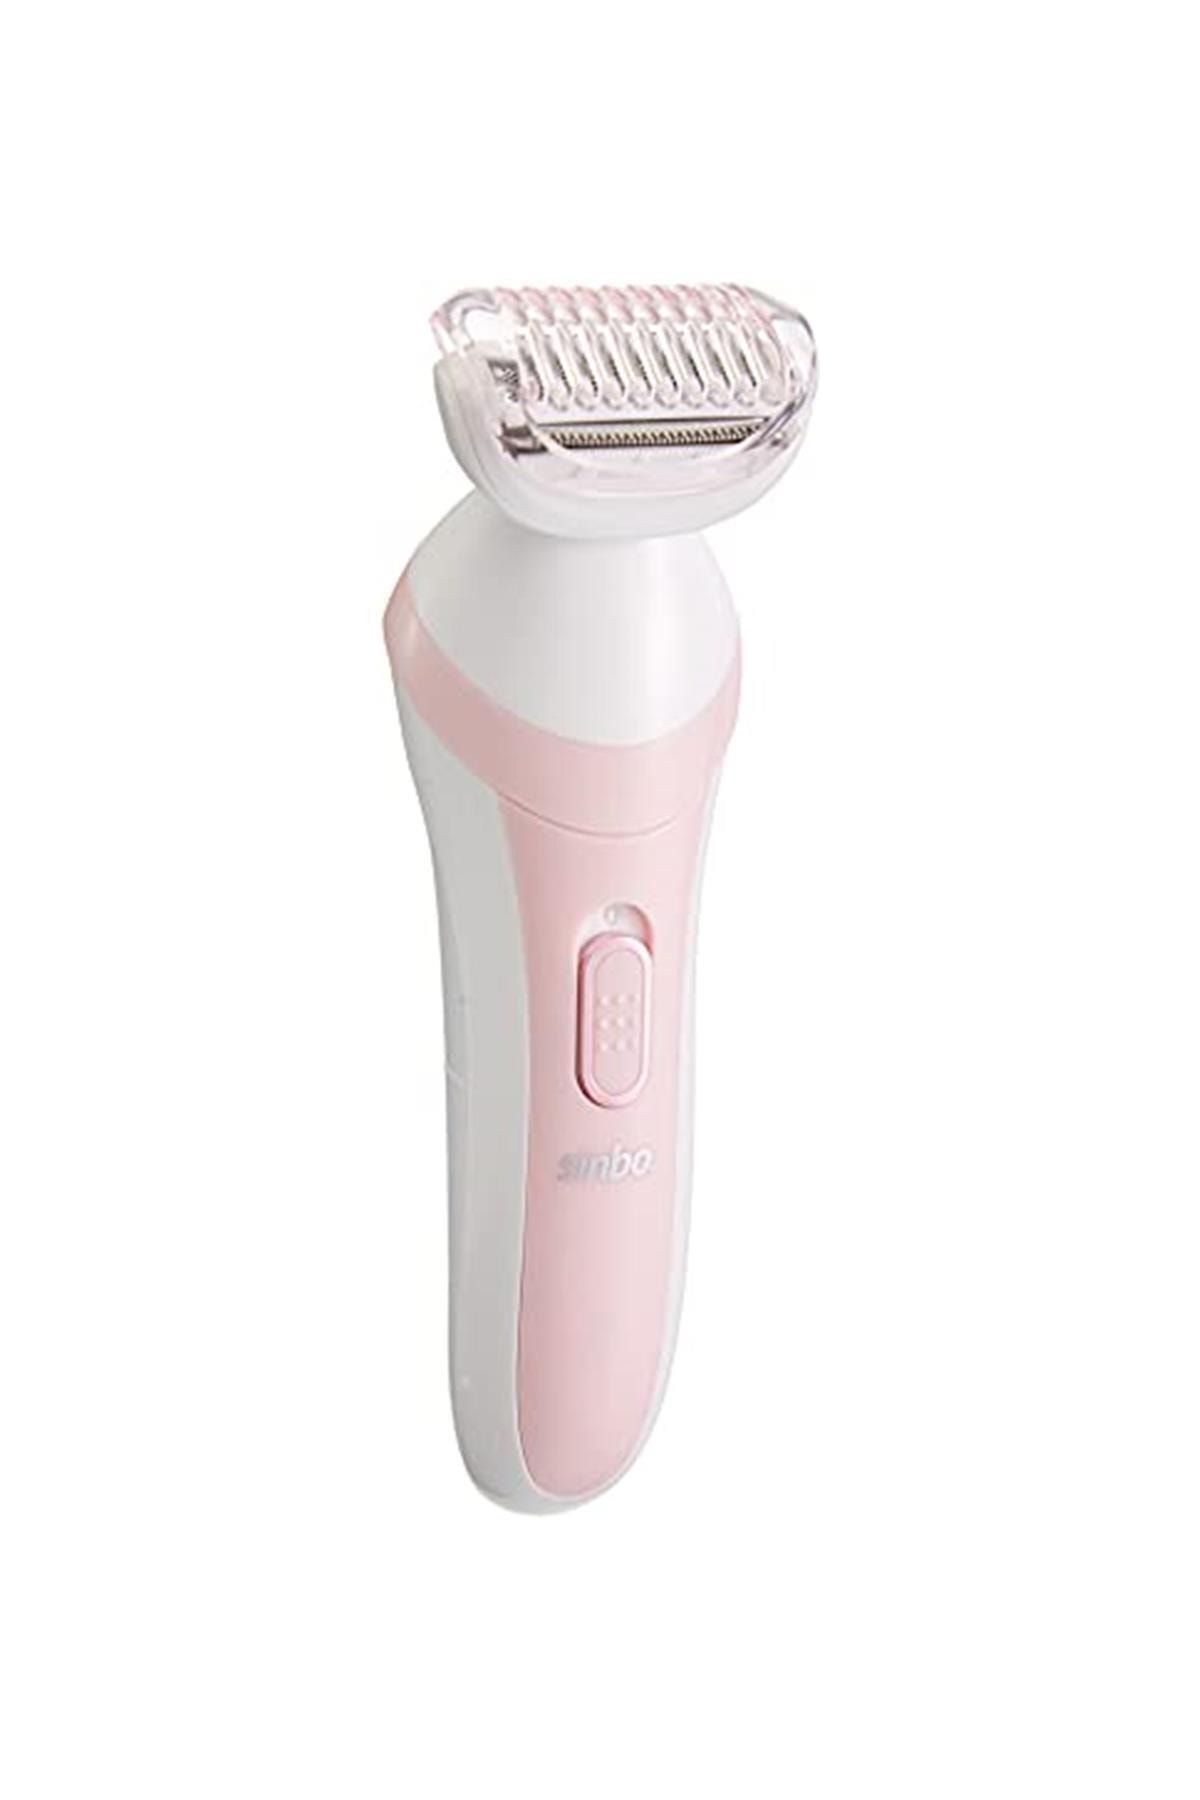 Sinbo Ss-4051 Kadın Tıraş Makinesi